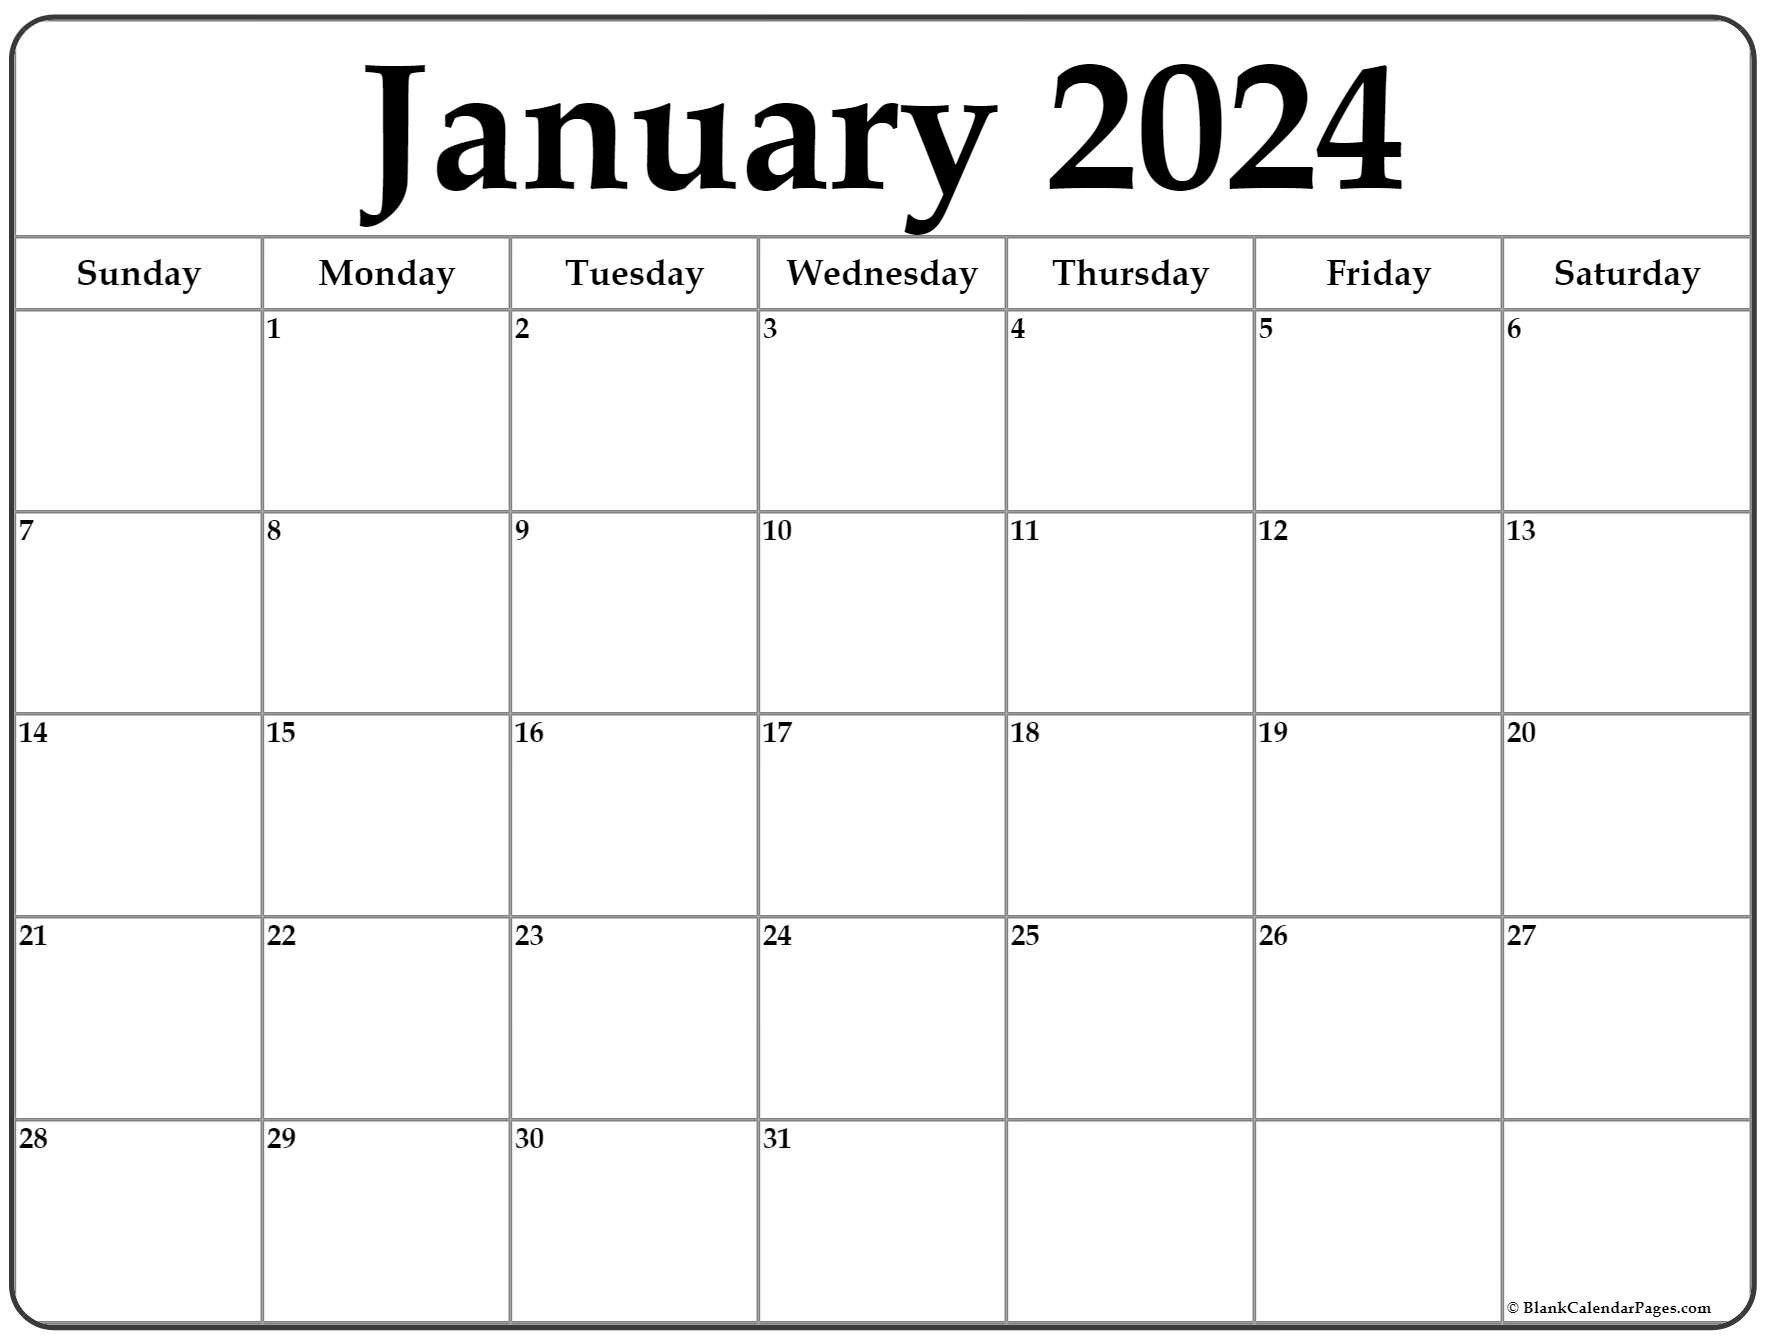 January 2024 Calendar | Free Printable Calendar with Free Printable Blank Calendar For 2024